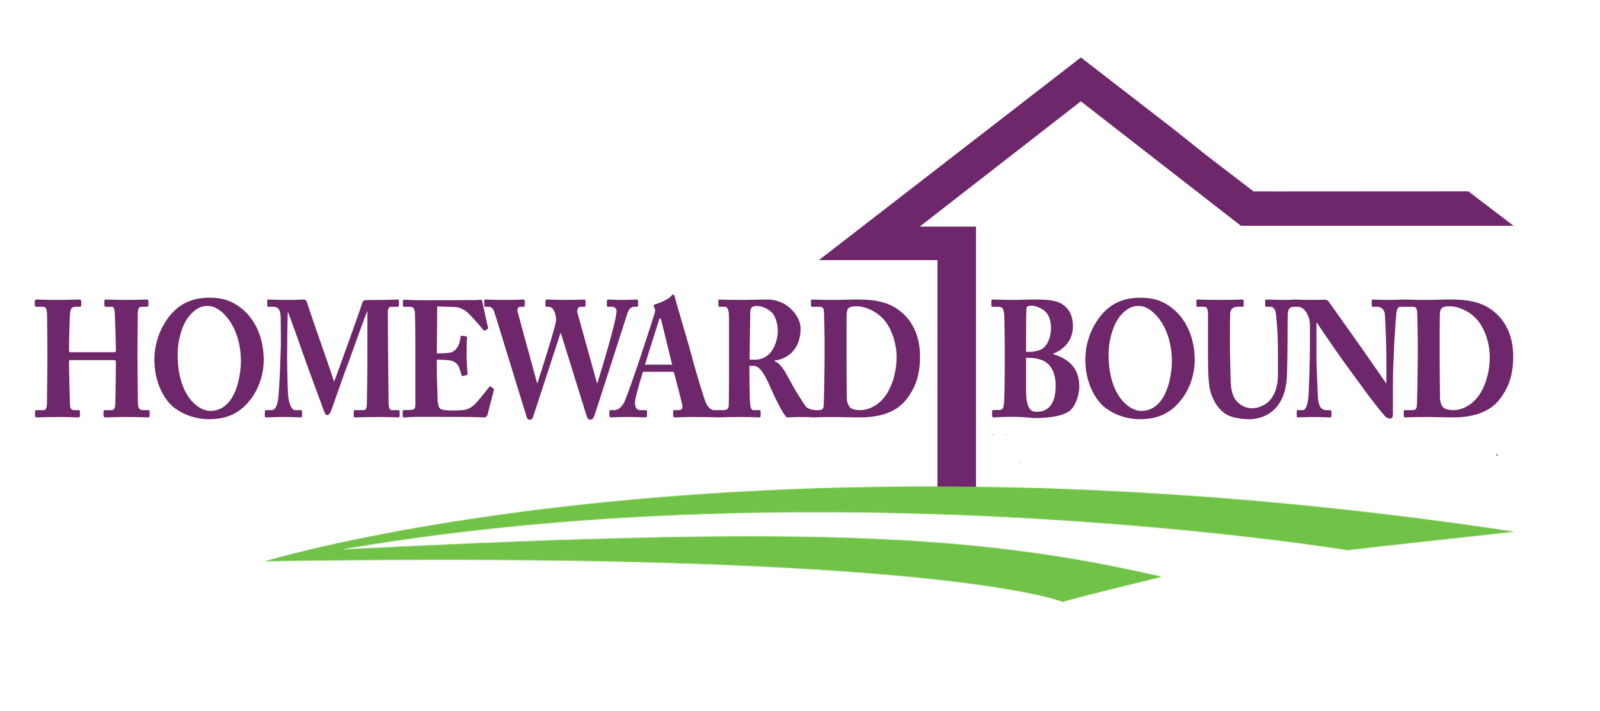 Homeward Bound logo